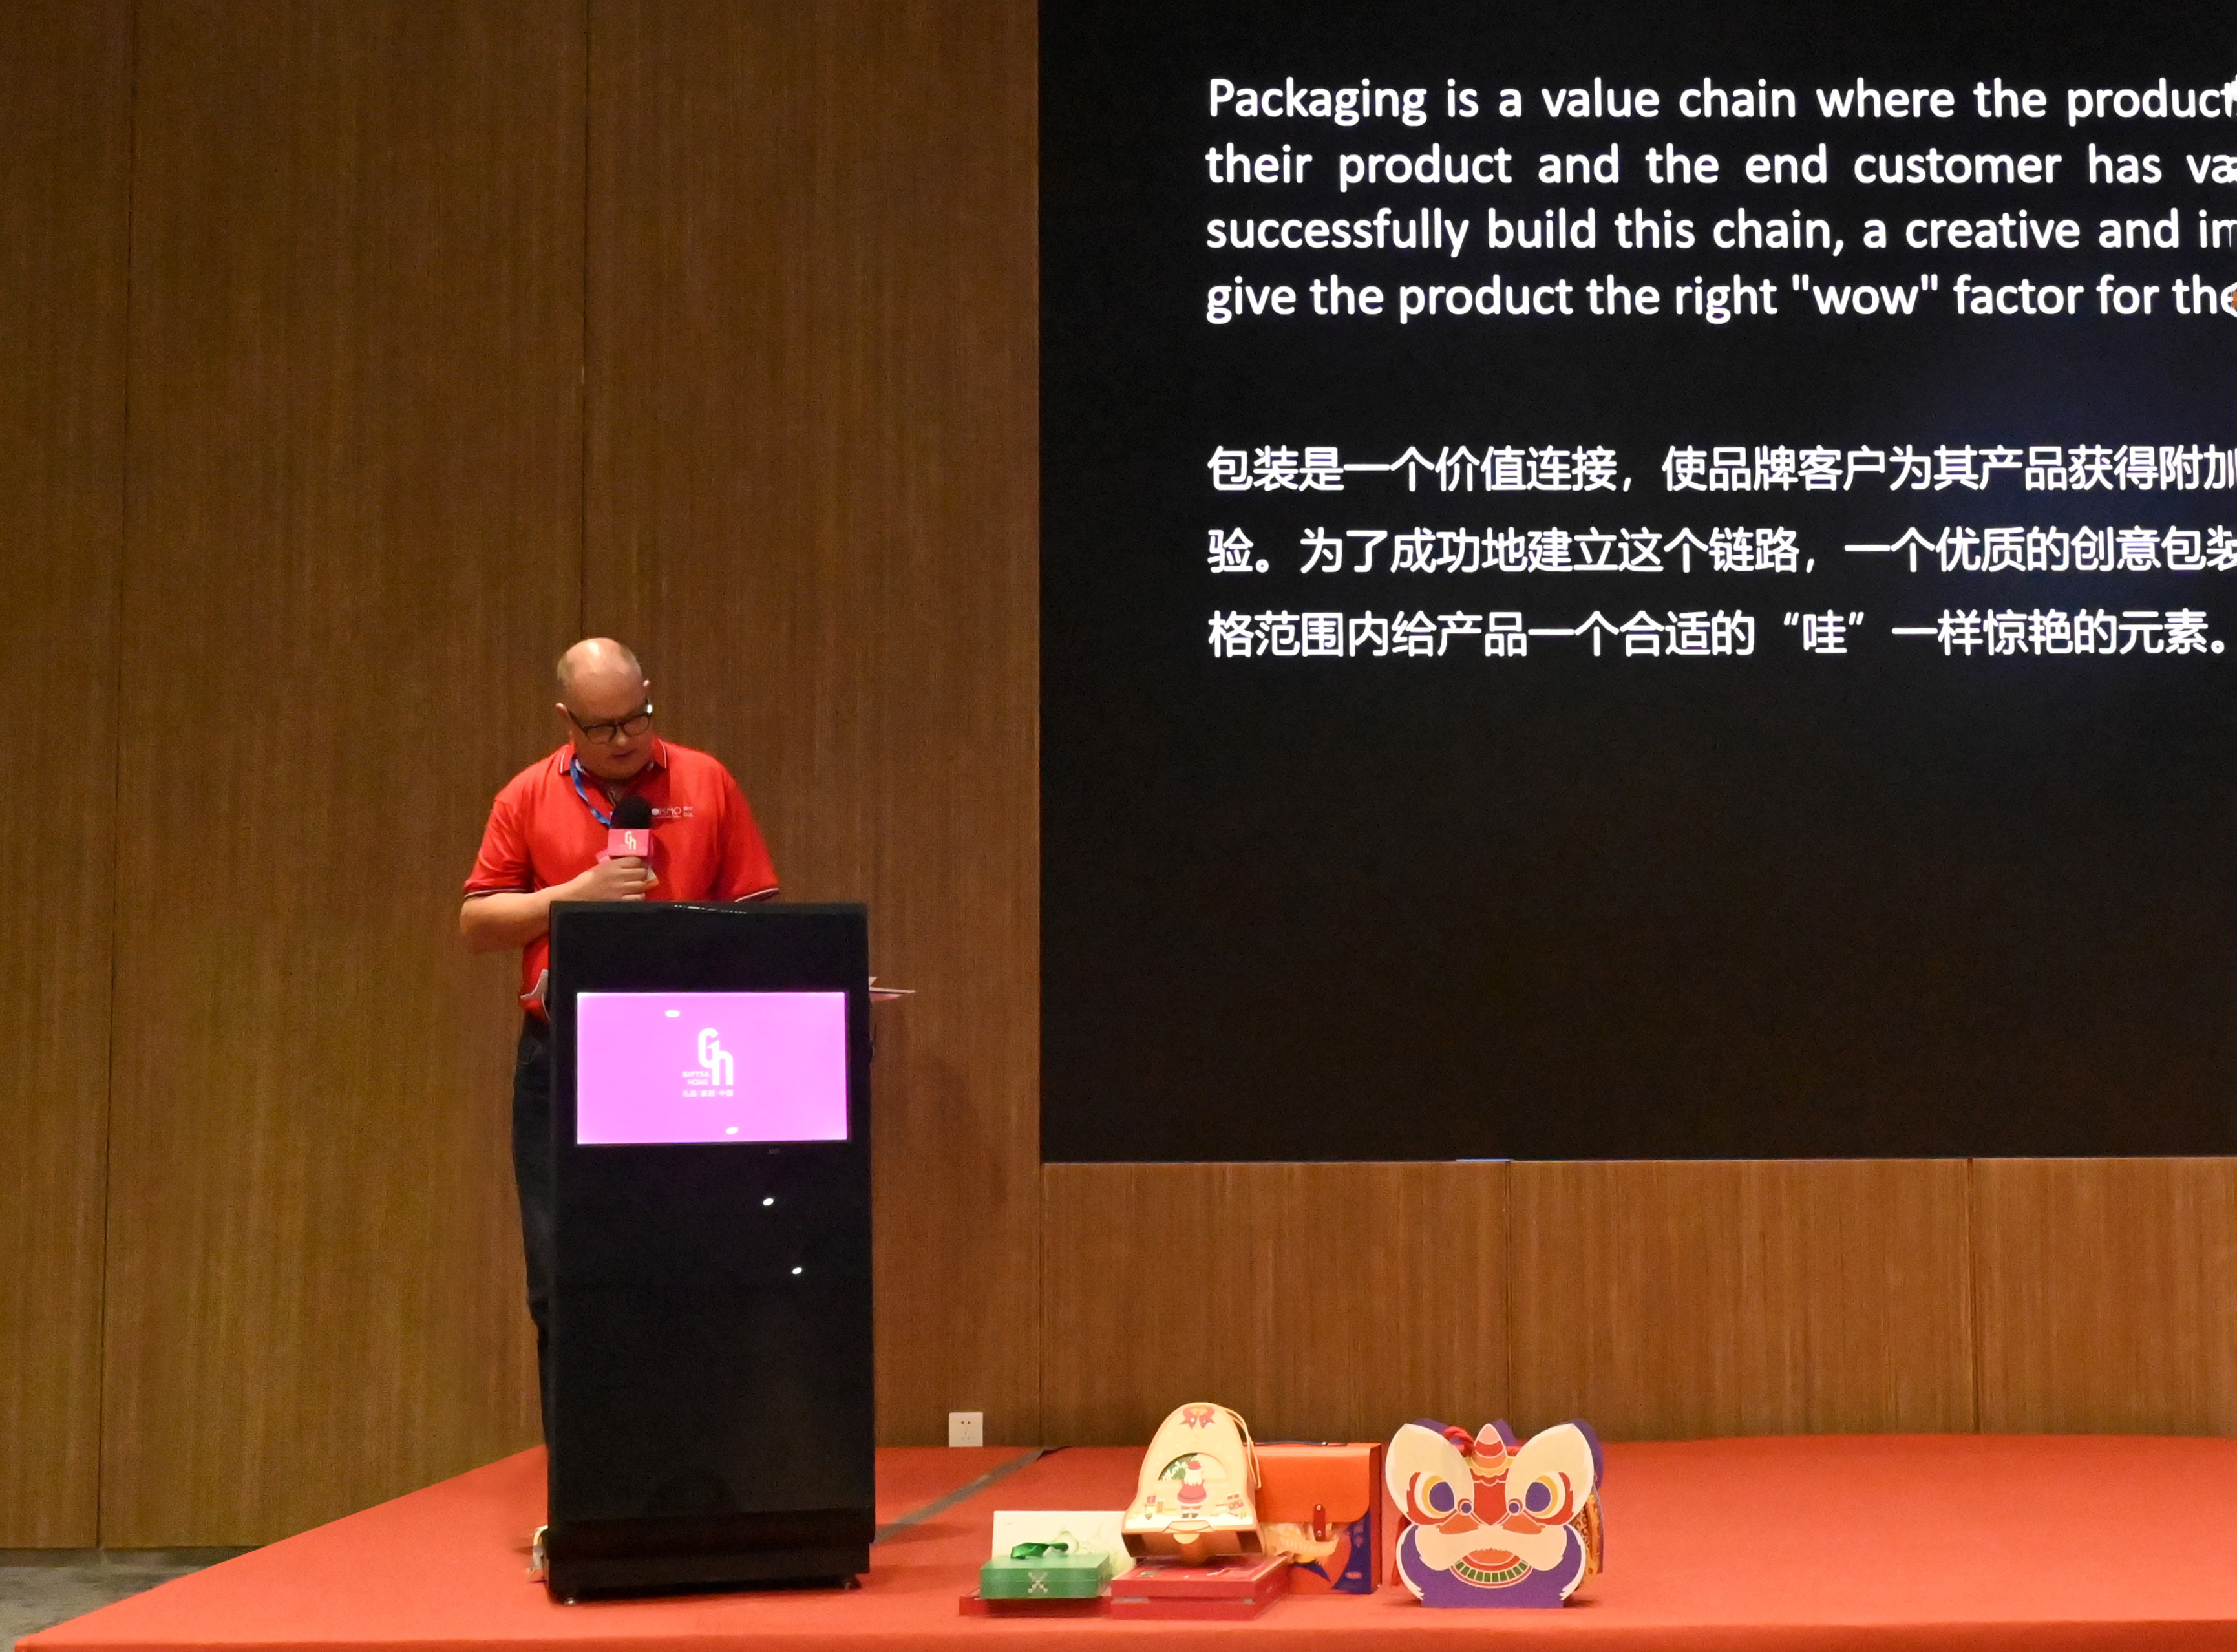 SEISMO CEO speech at Shenzhen Trade Fair about Creative Packaging Design